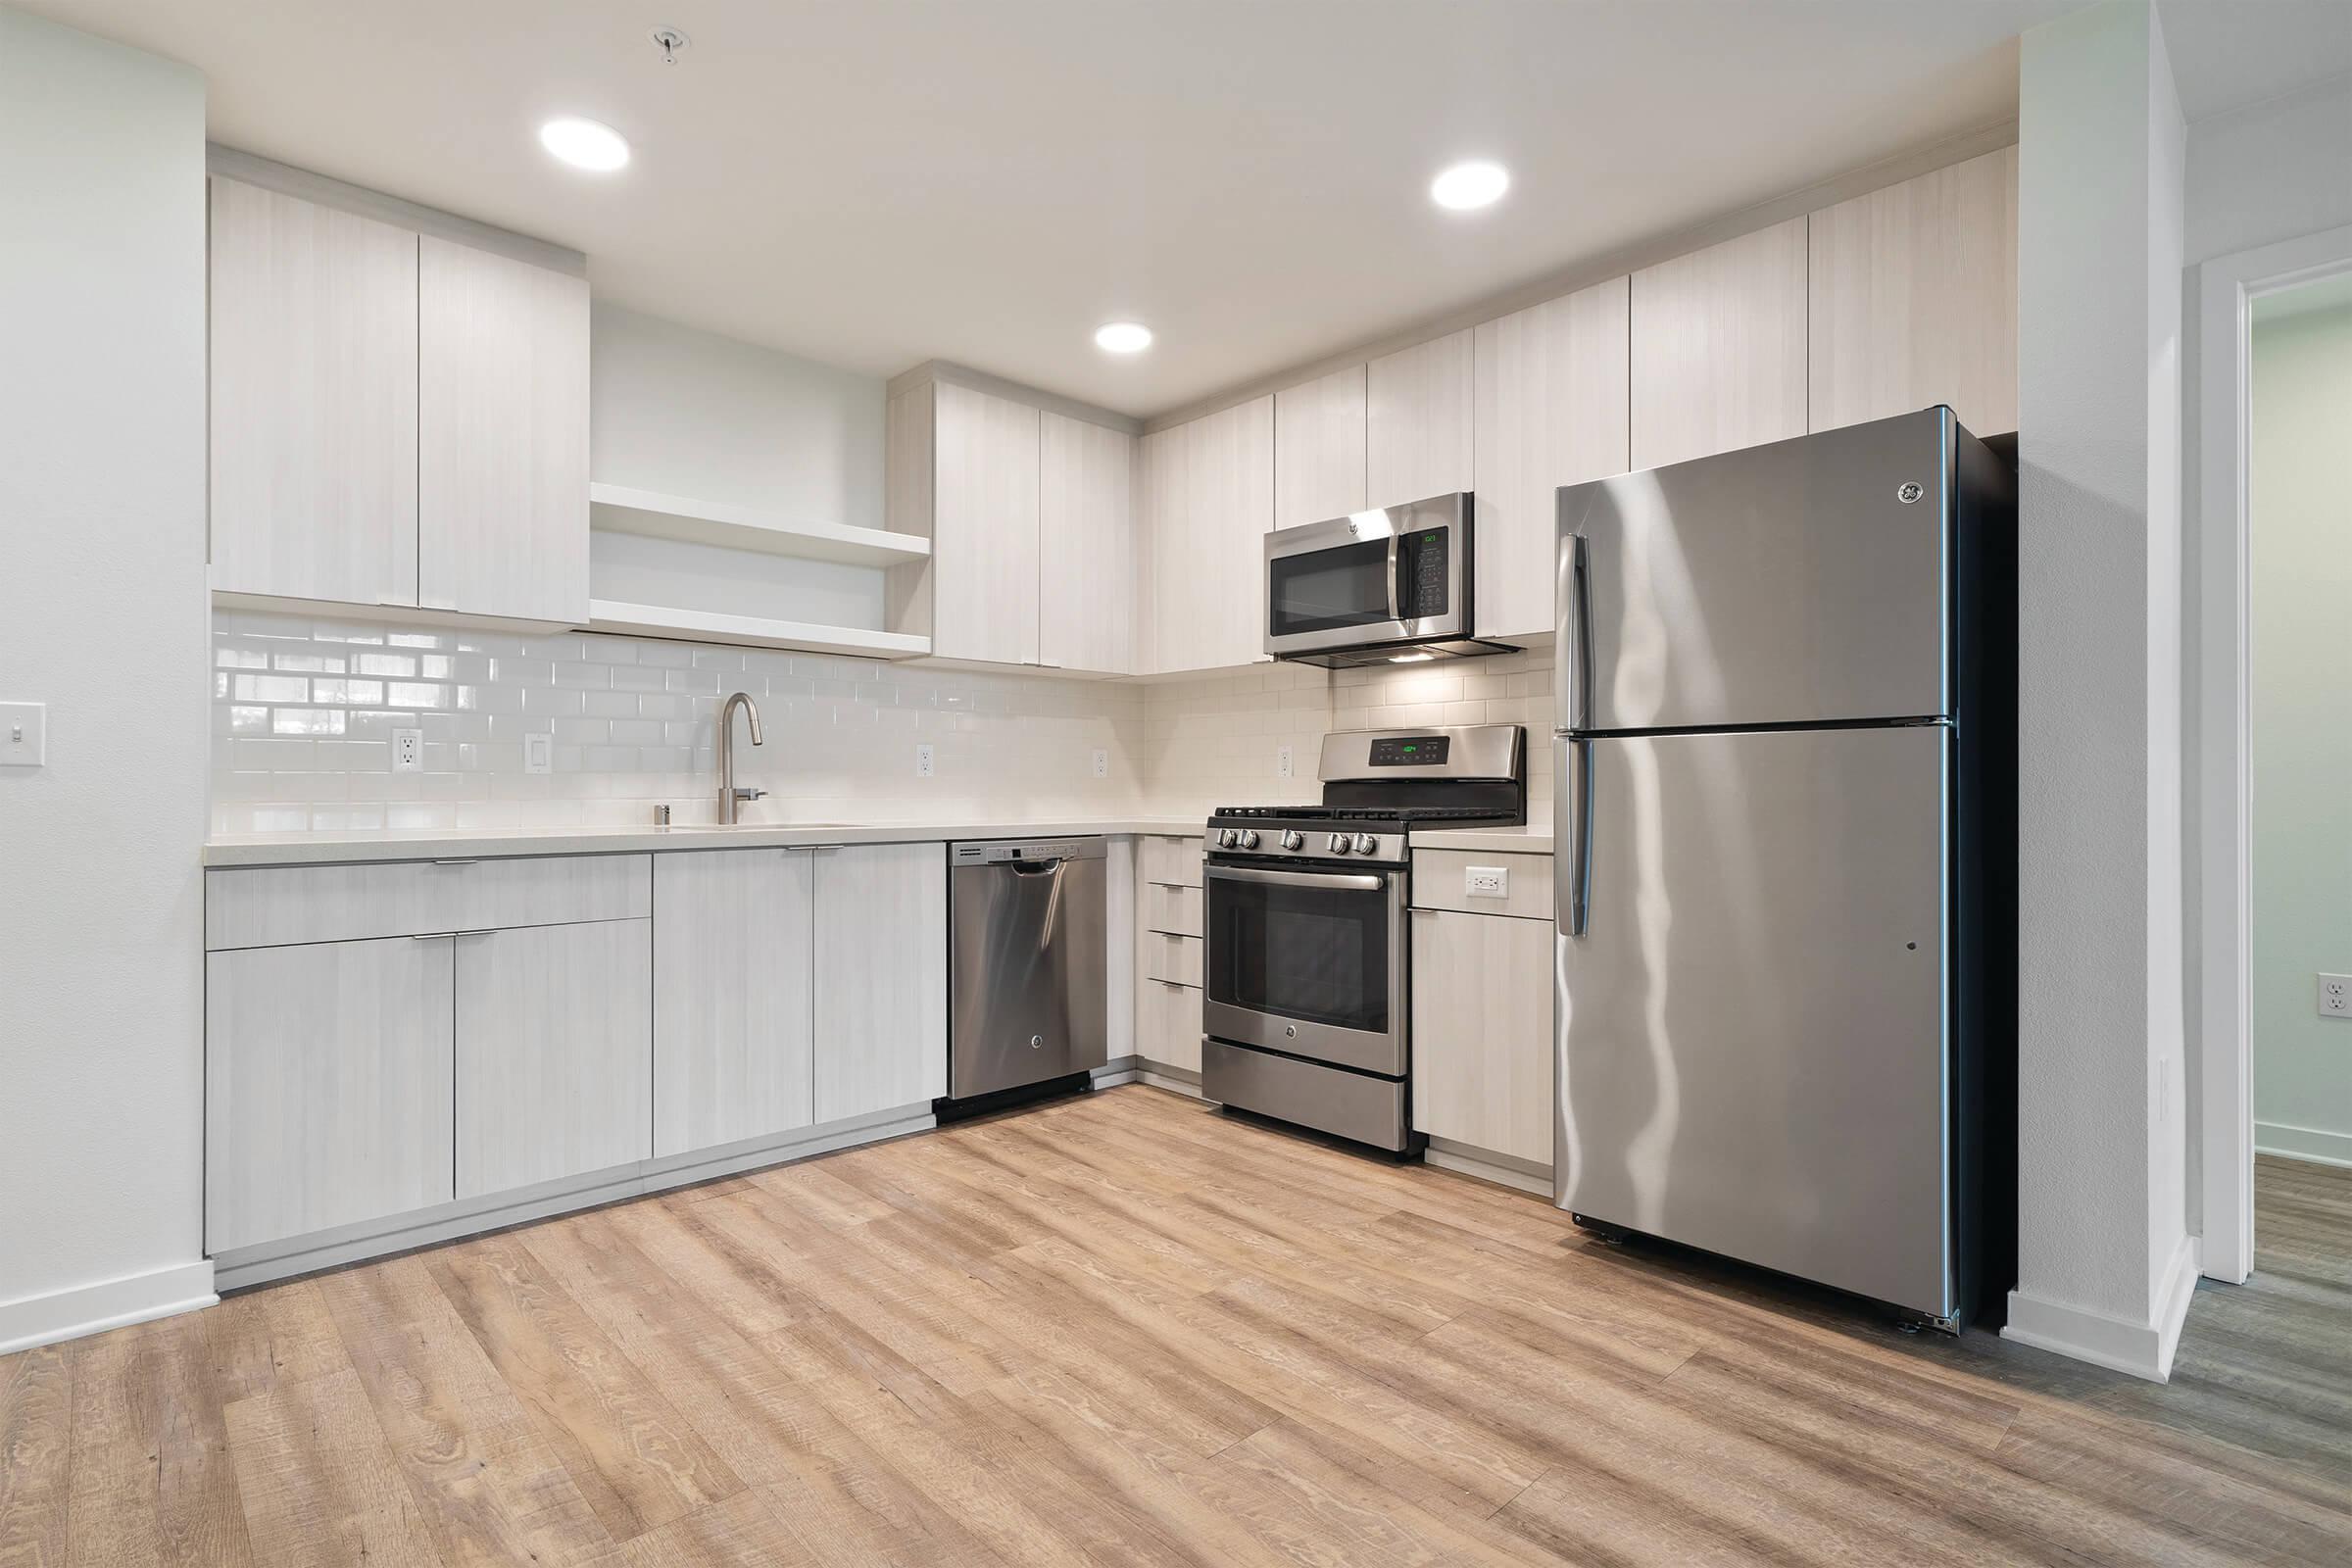 Kitchens include quartz countertops, tile backsplash, and stainless or slate finish appliances